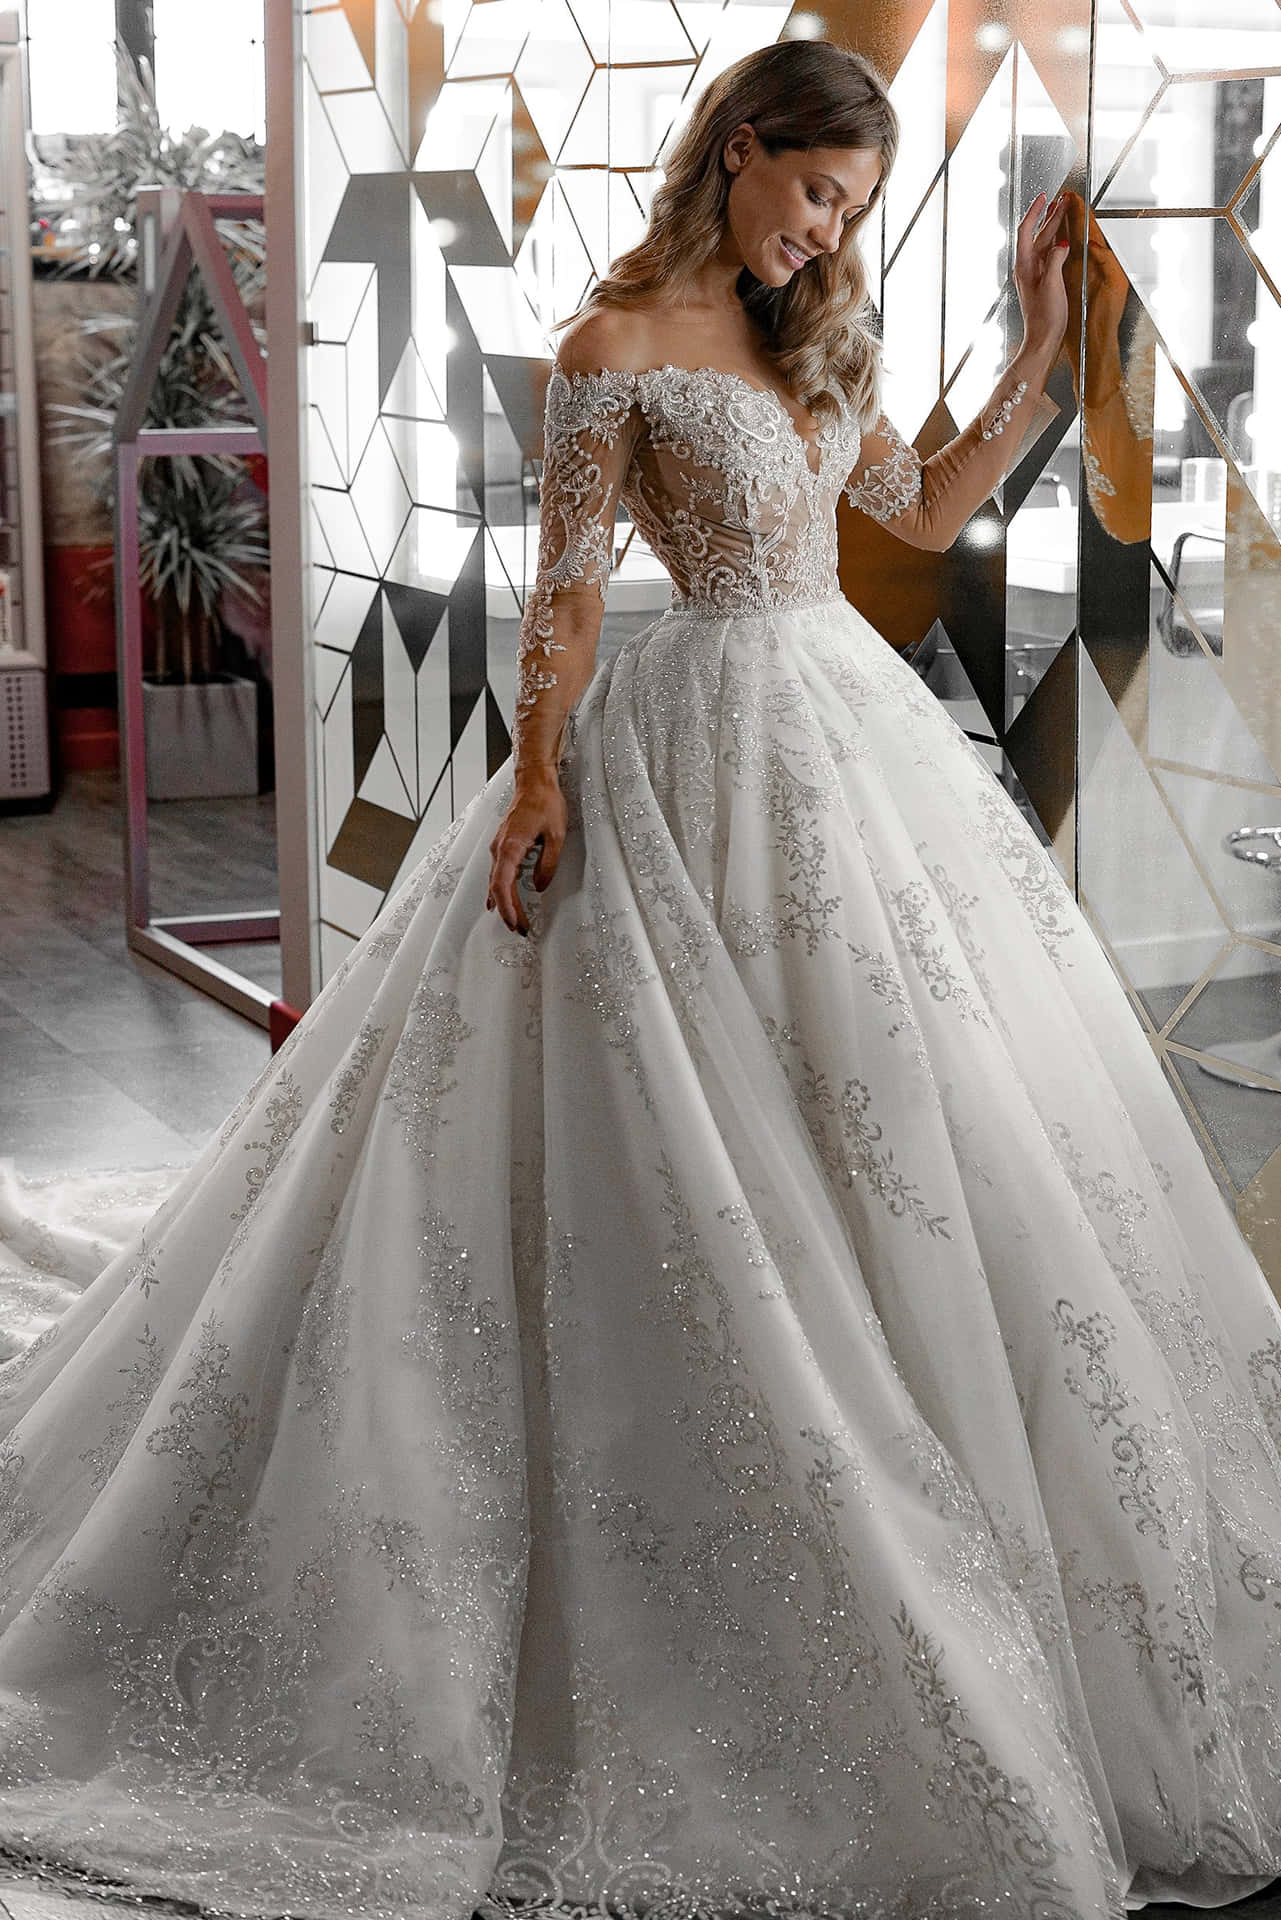 A Bride in her Dream Dress Wallpaper